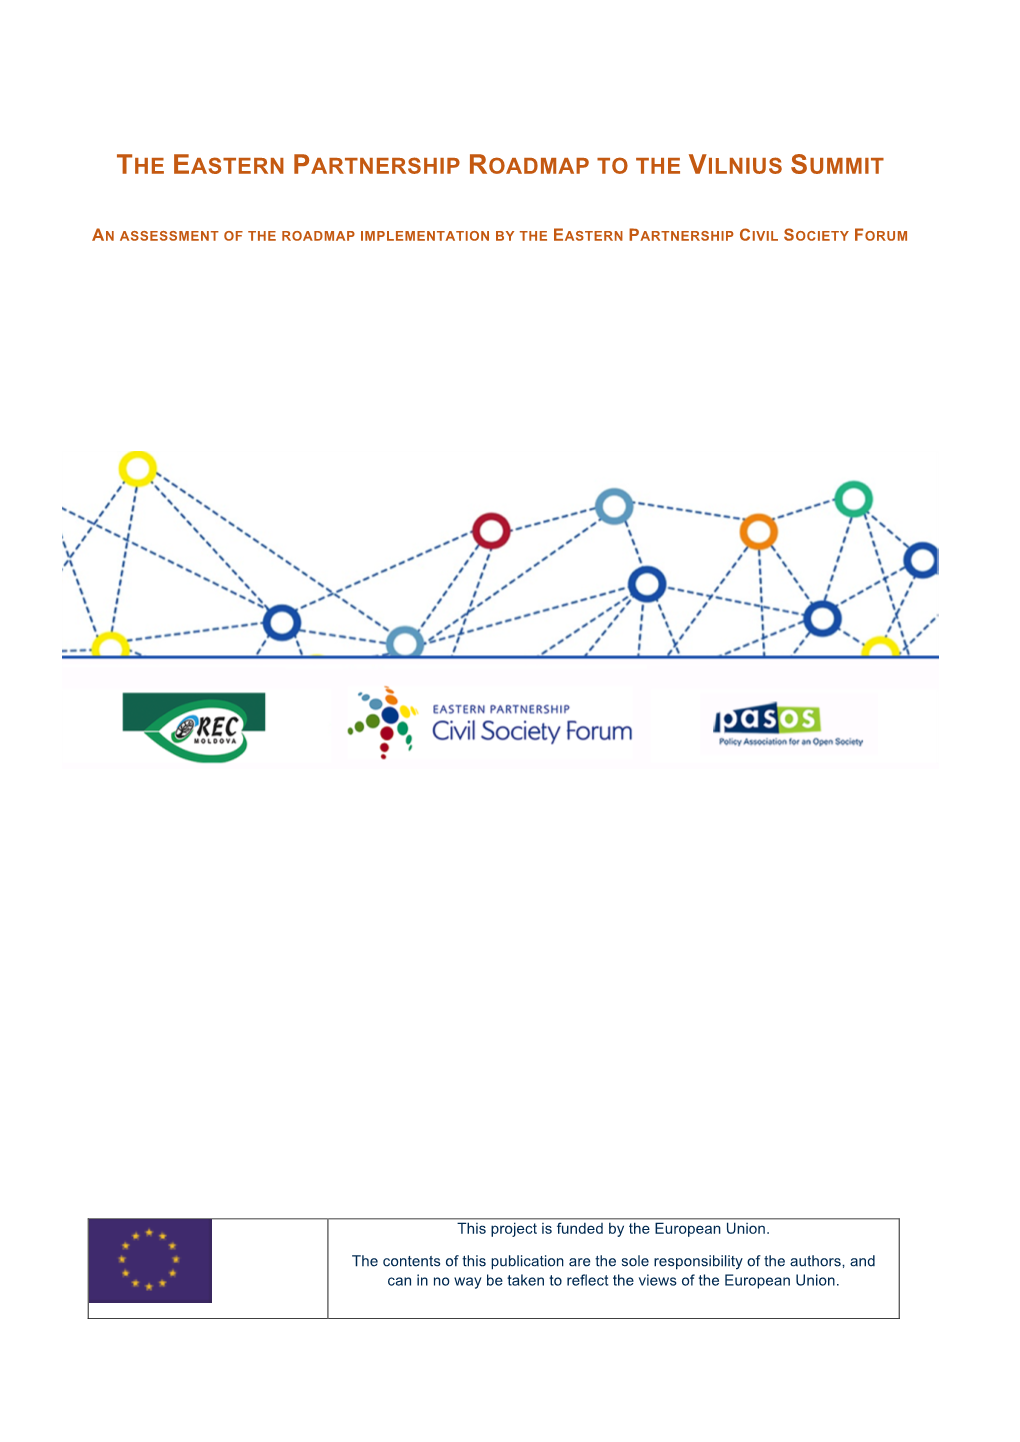 Eap CSF Roadmap Report Overview 13 Nov 2013